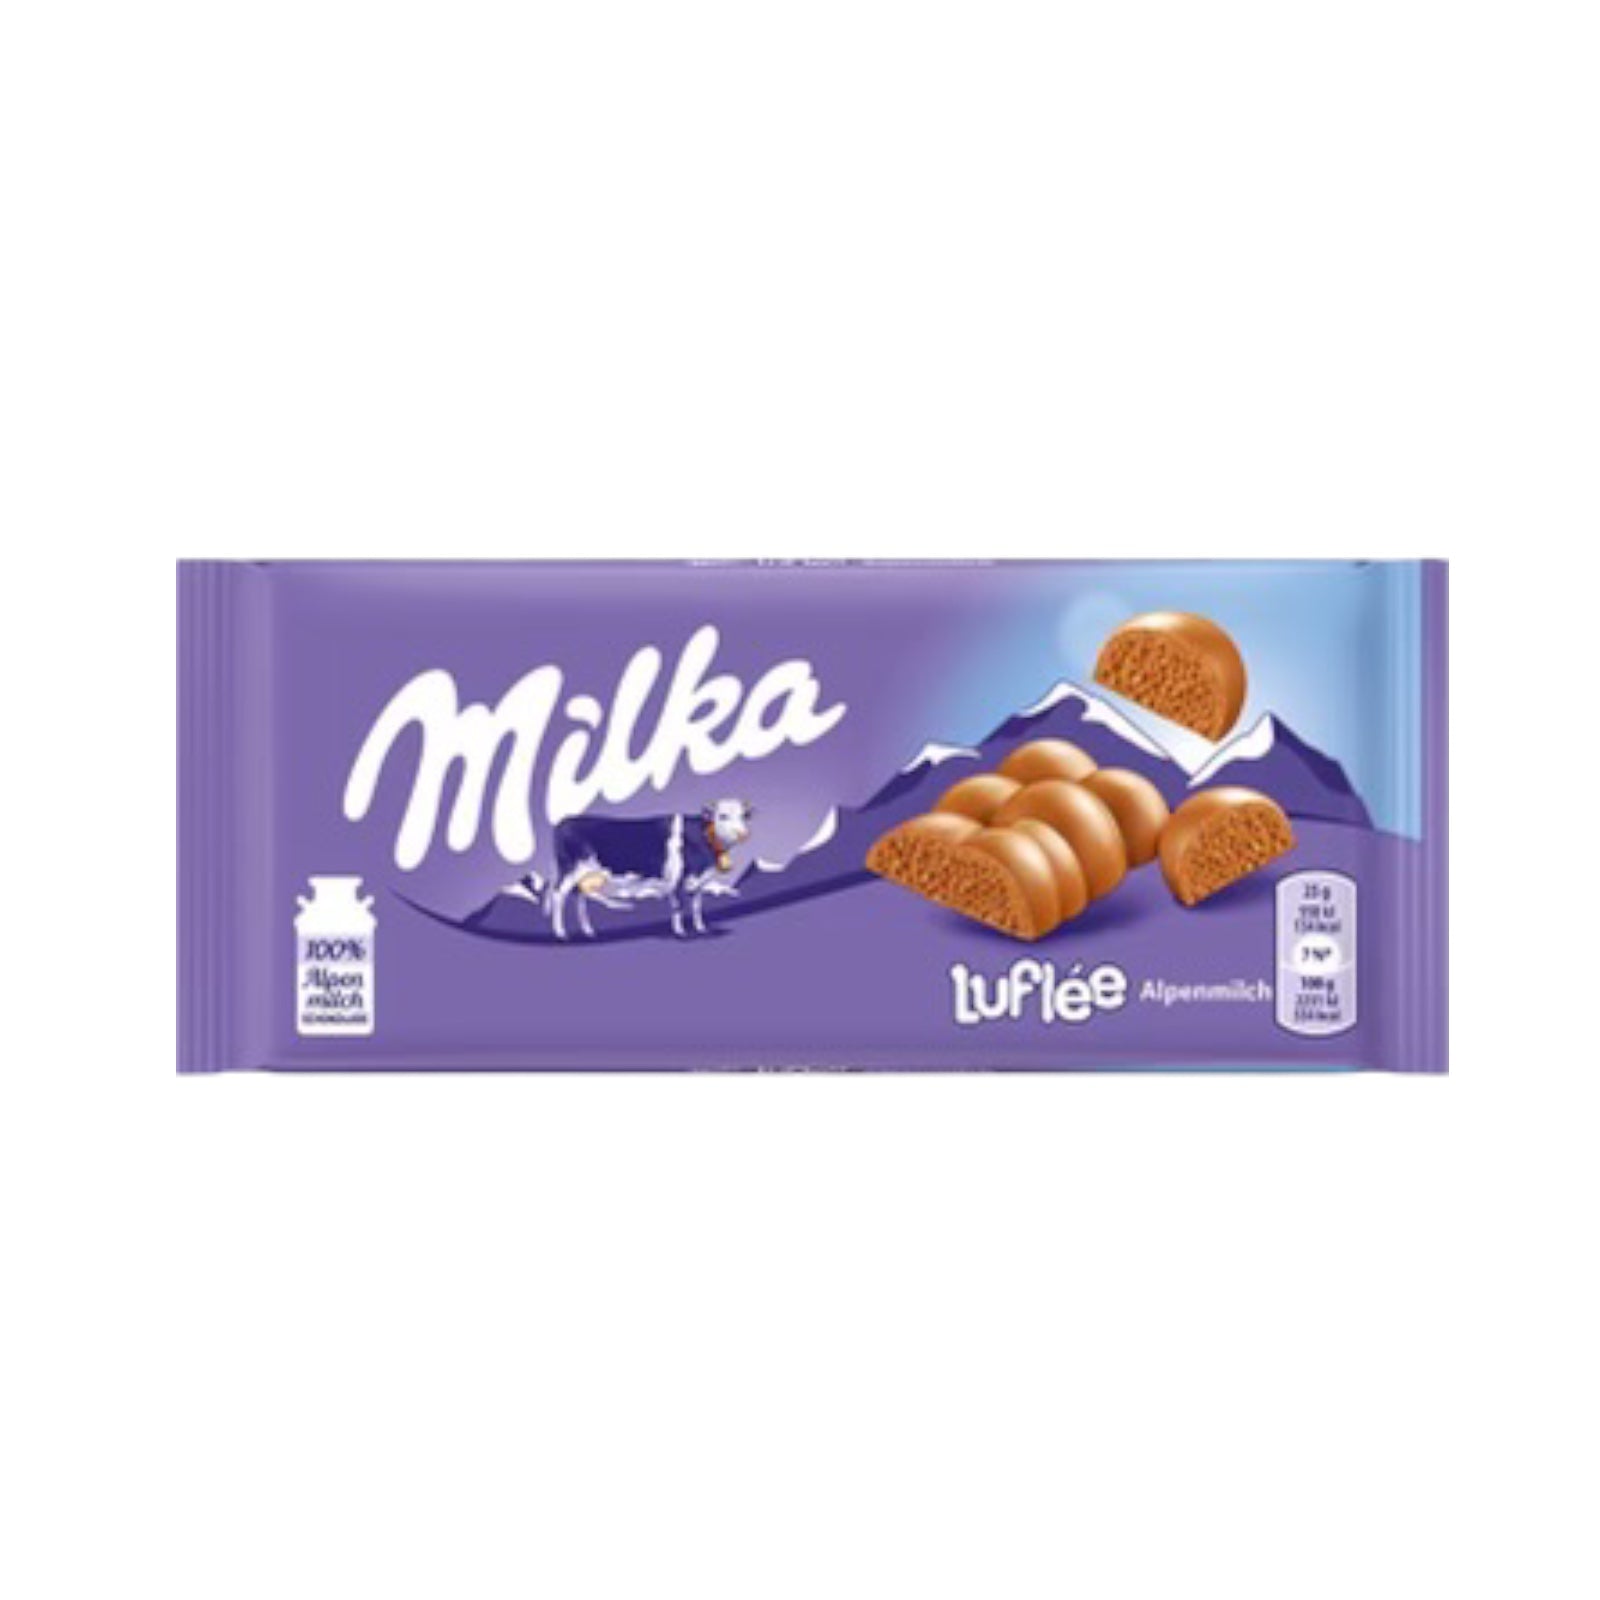 Milka Luflee Chocolate Bar 100g/3.52oz.